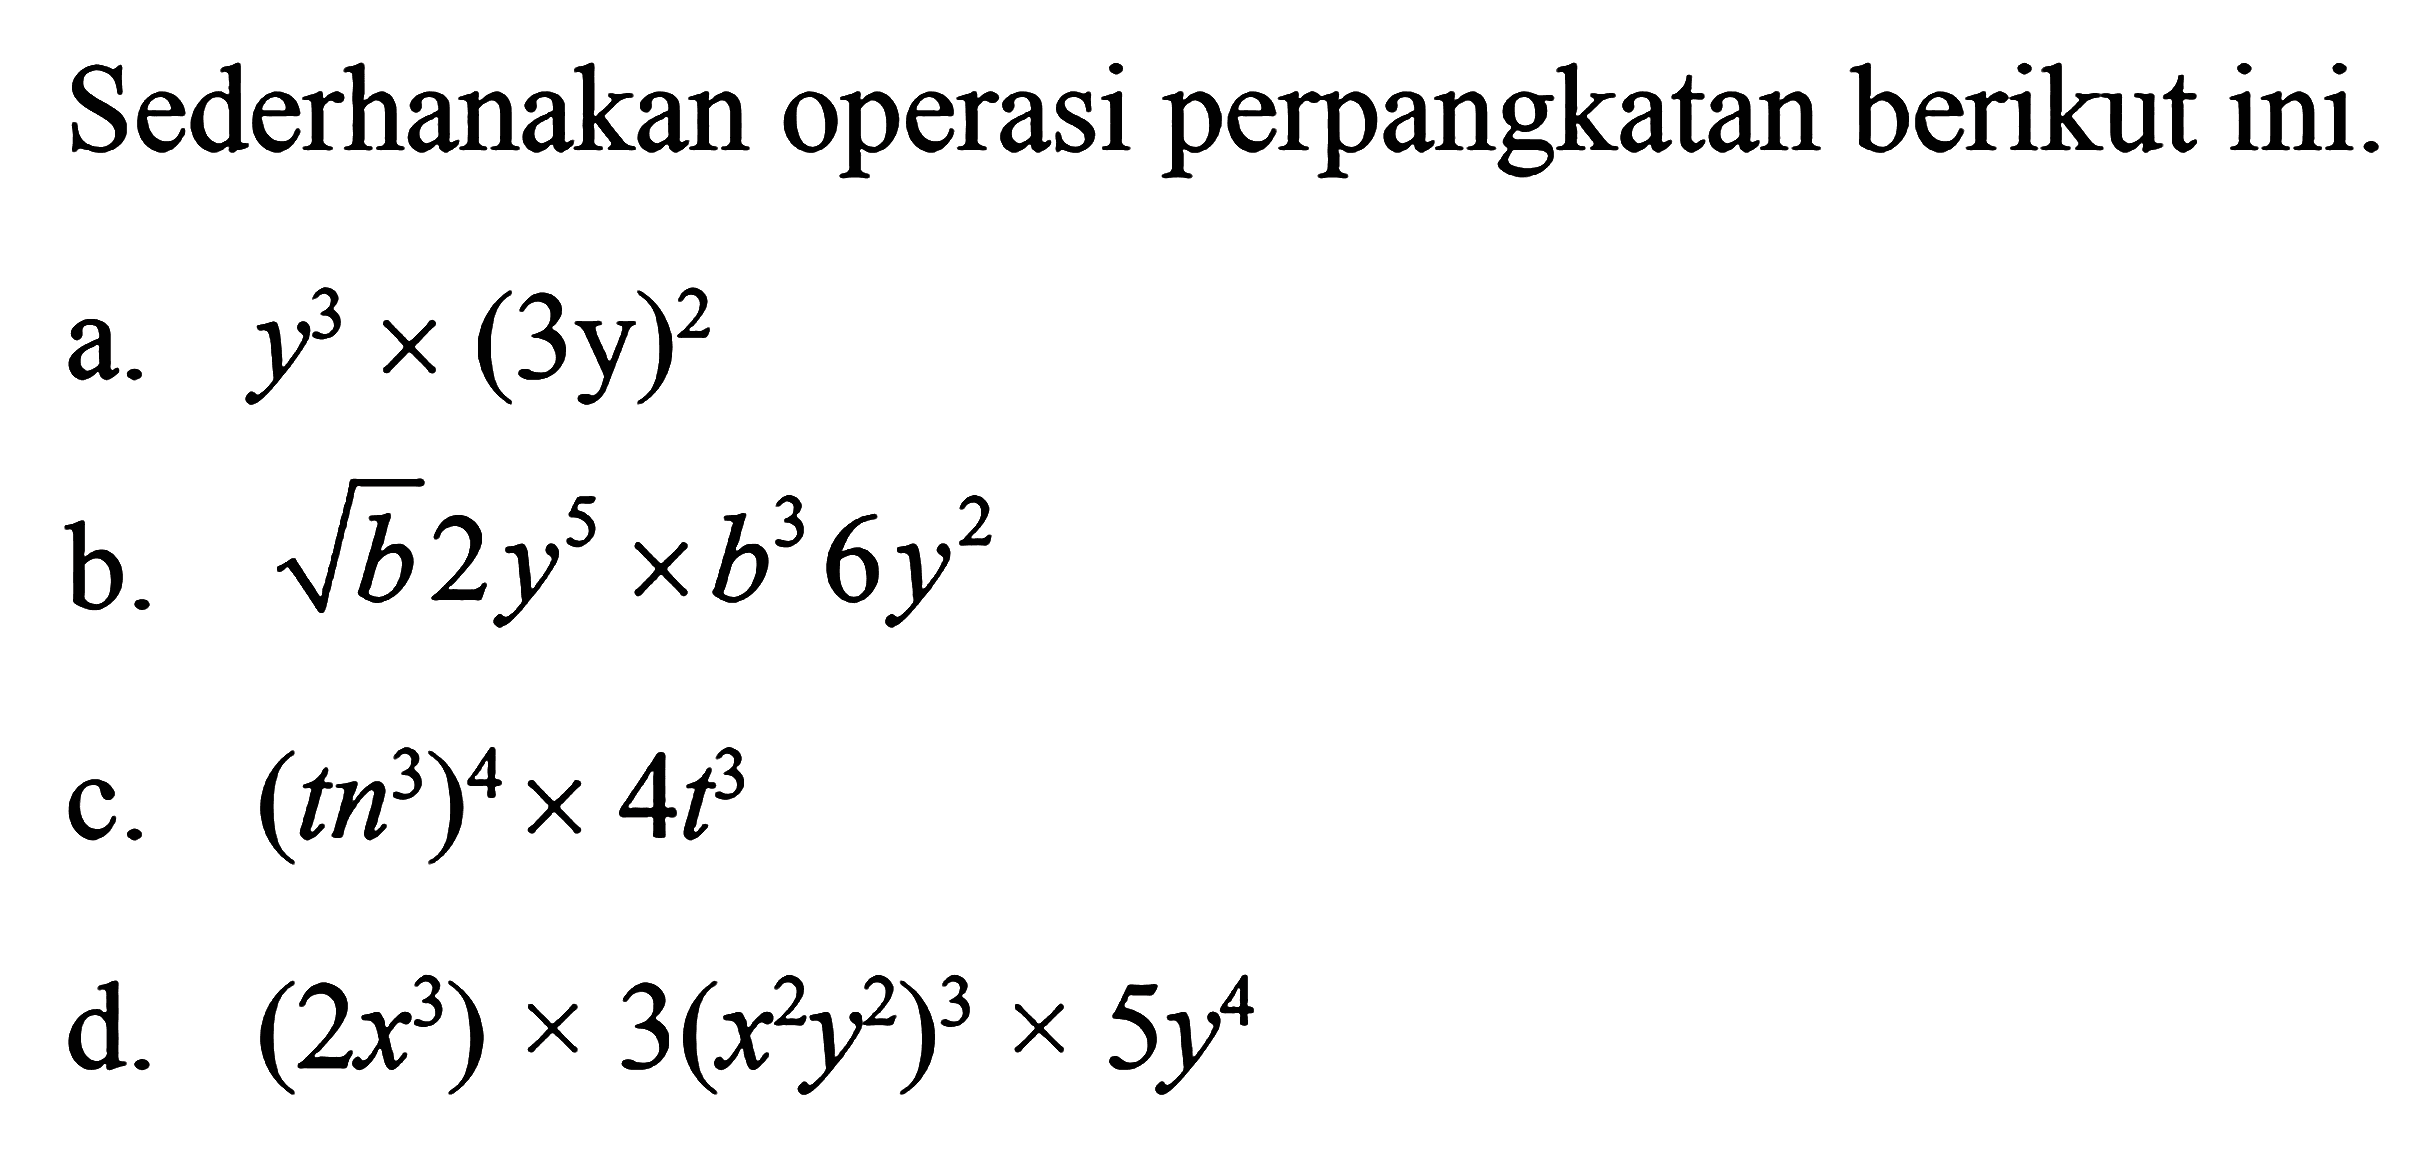 Sederhanakan operasi perpangkatan berikut ini. a. y^3 x (3y)^2 b. akar(b) 2 y^5 x b^3 6 y^2 c. (tn^3)^4 x 4t^3 d. (2x^3) x 3(x^2 y^2)^3 x 5y^4